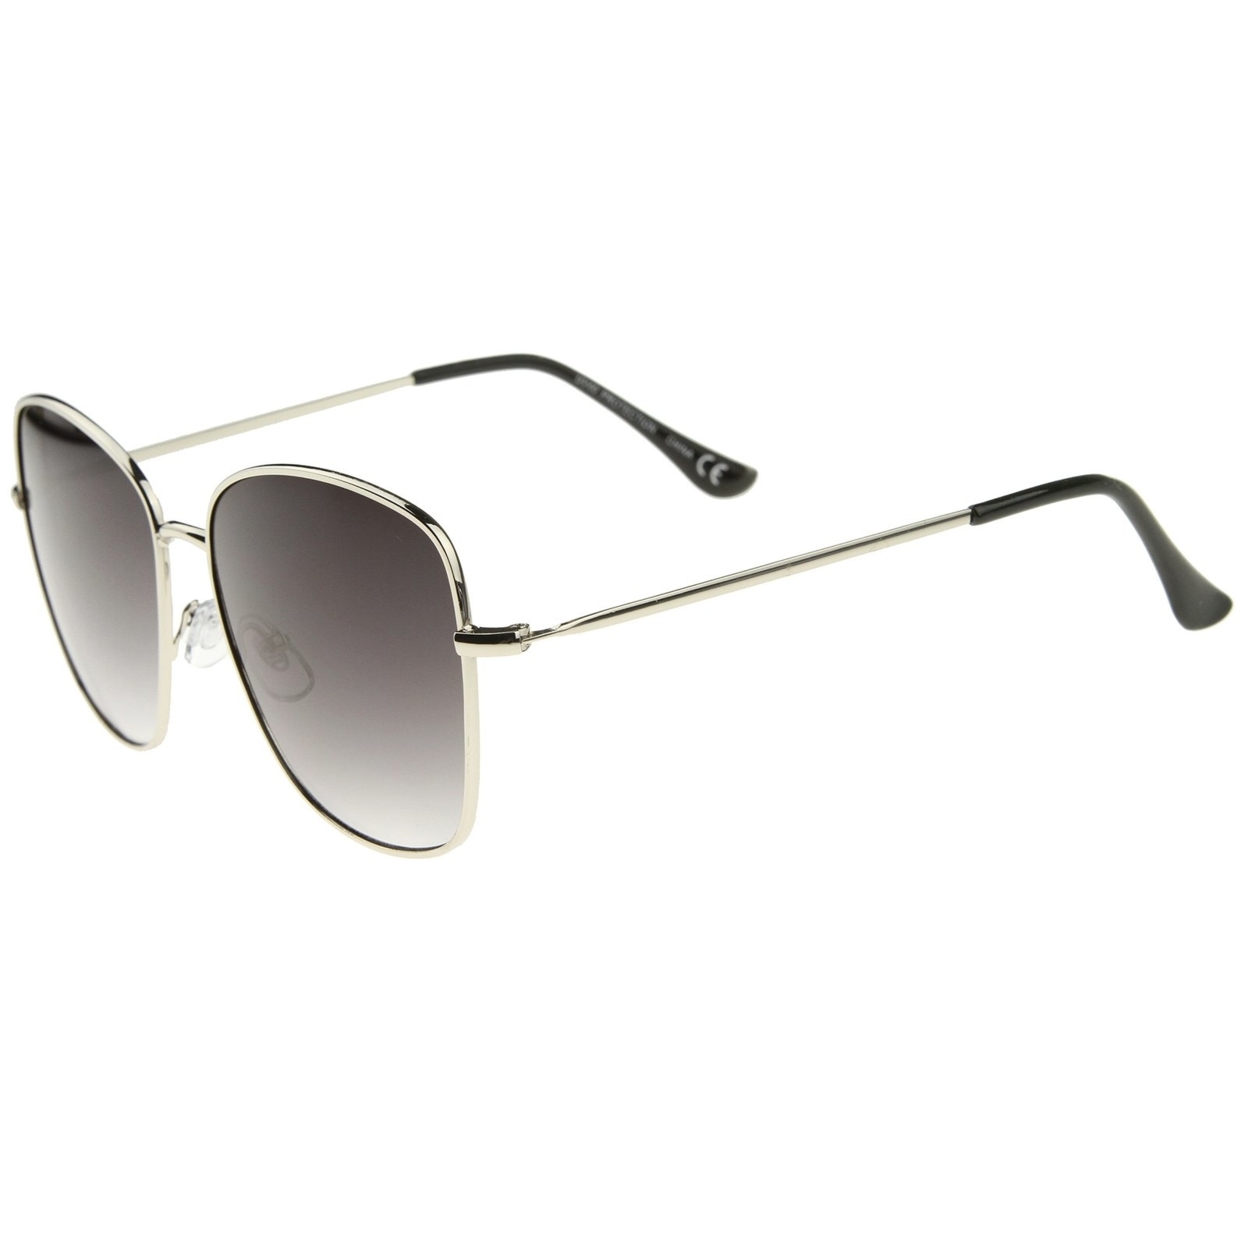 Contemporary Modern Fashion Full Metal Slim Temple Square Sunglasses 57mm - Matte Gold / Brown